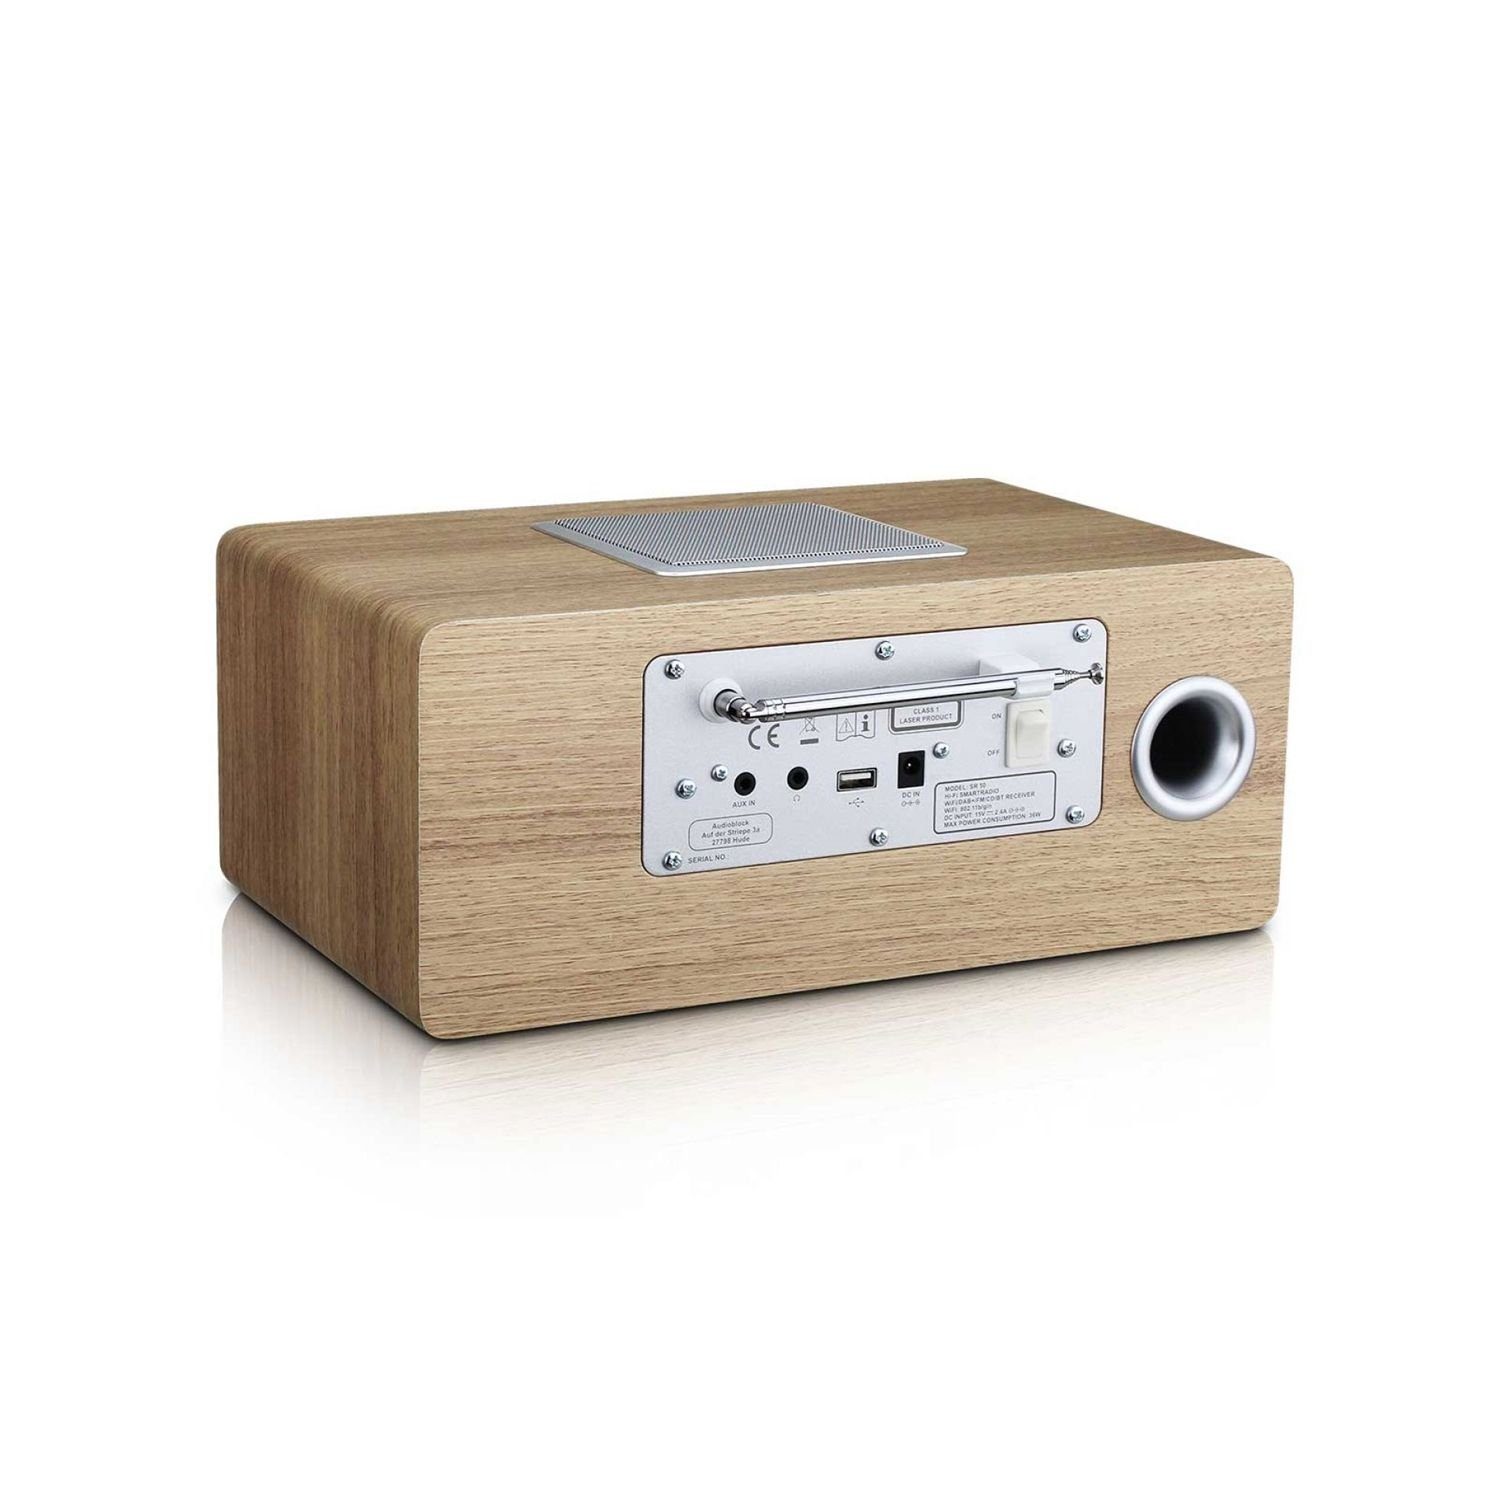 Block SR-50 Smartradio Spotify (DAB) walnuss/silber USB CD Bluetooth UKW/DAB+/Internetradio Digitalradio